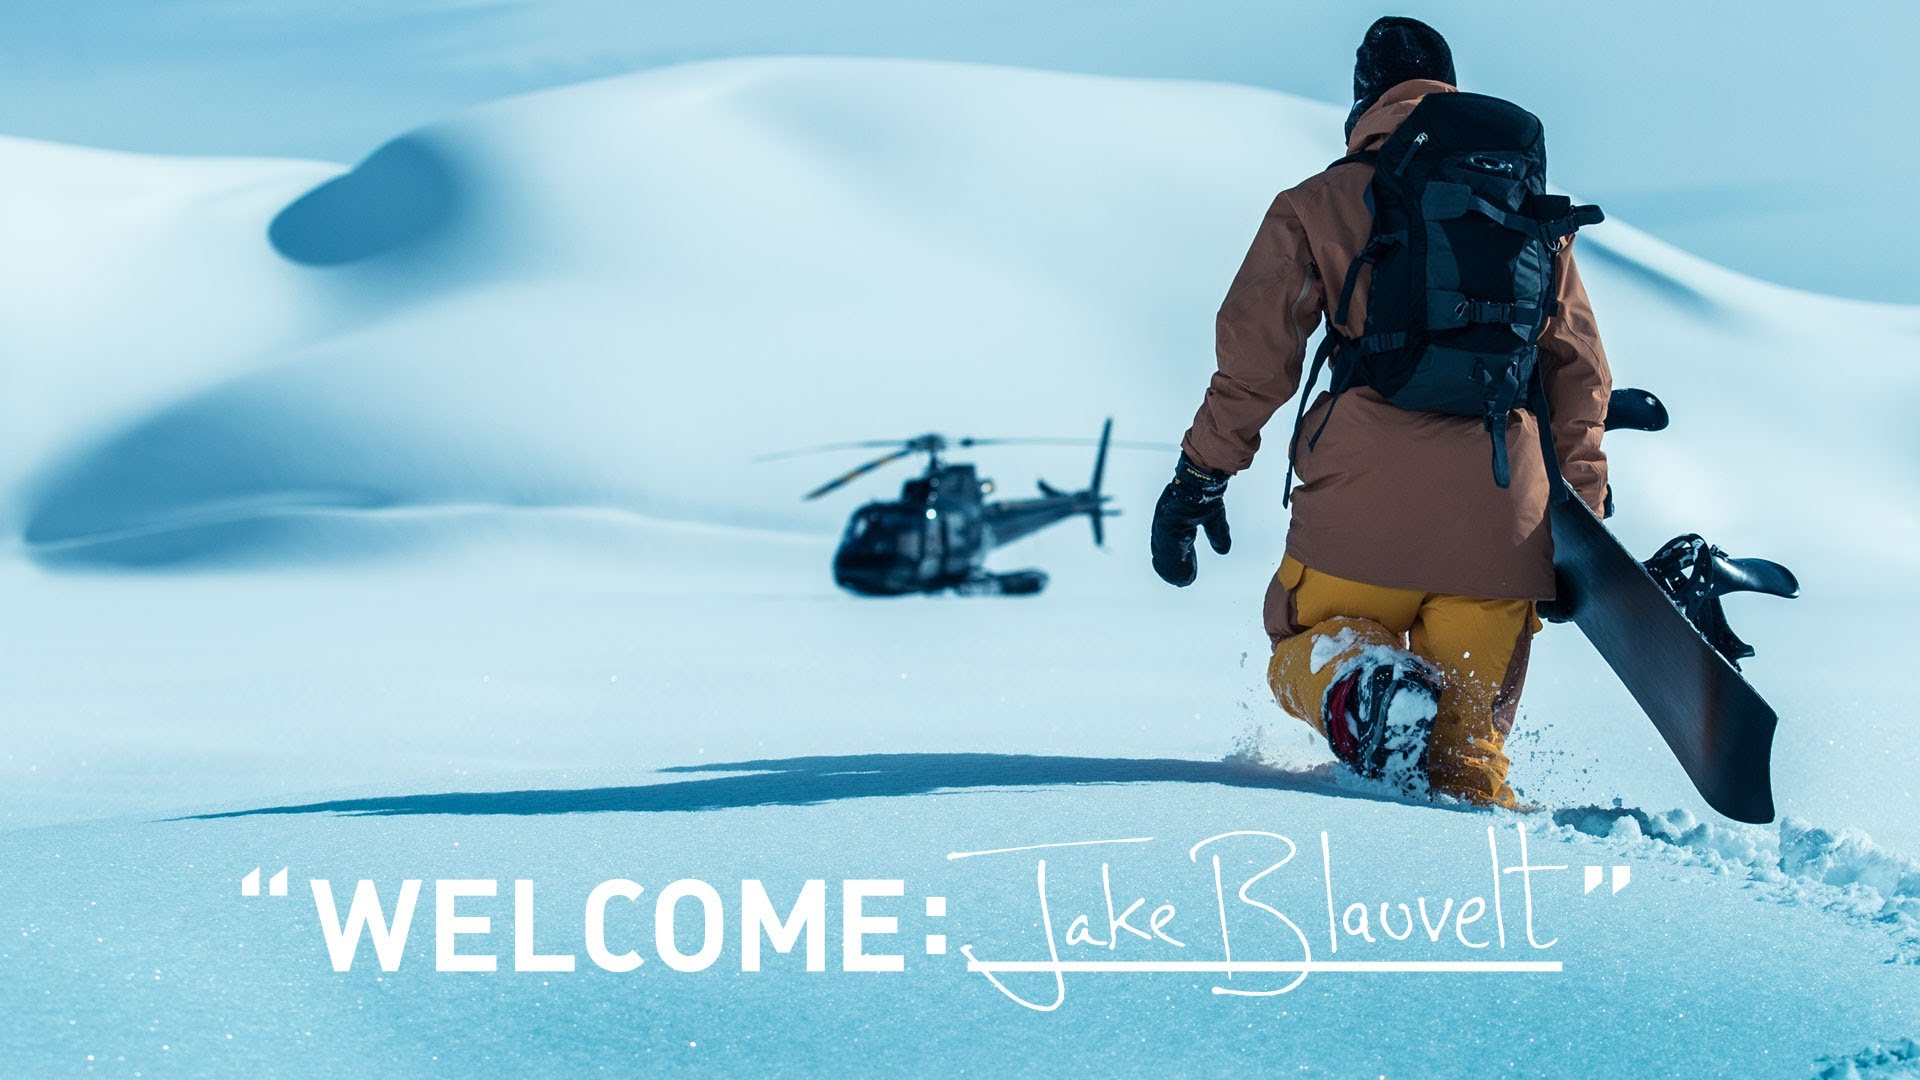 Adidas Snowboarding - Jake Blauvelt riders.me